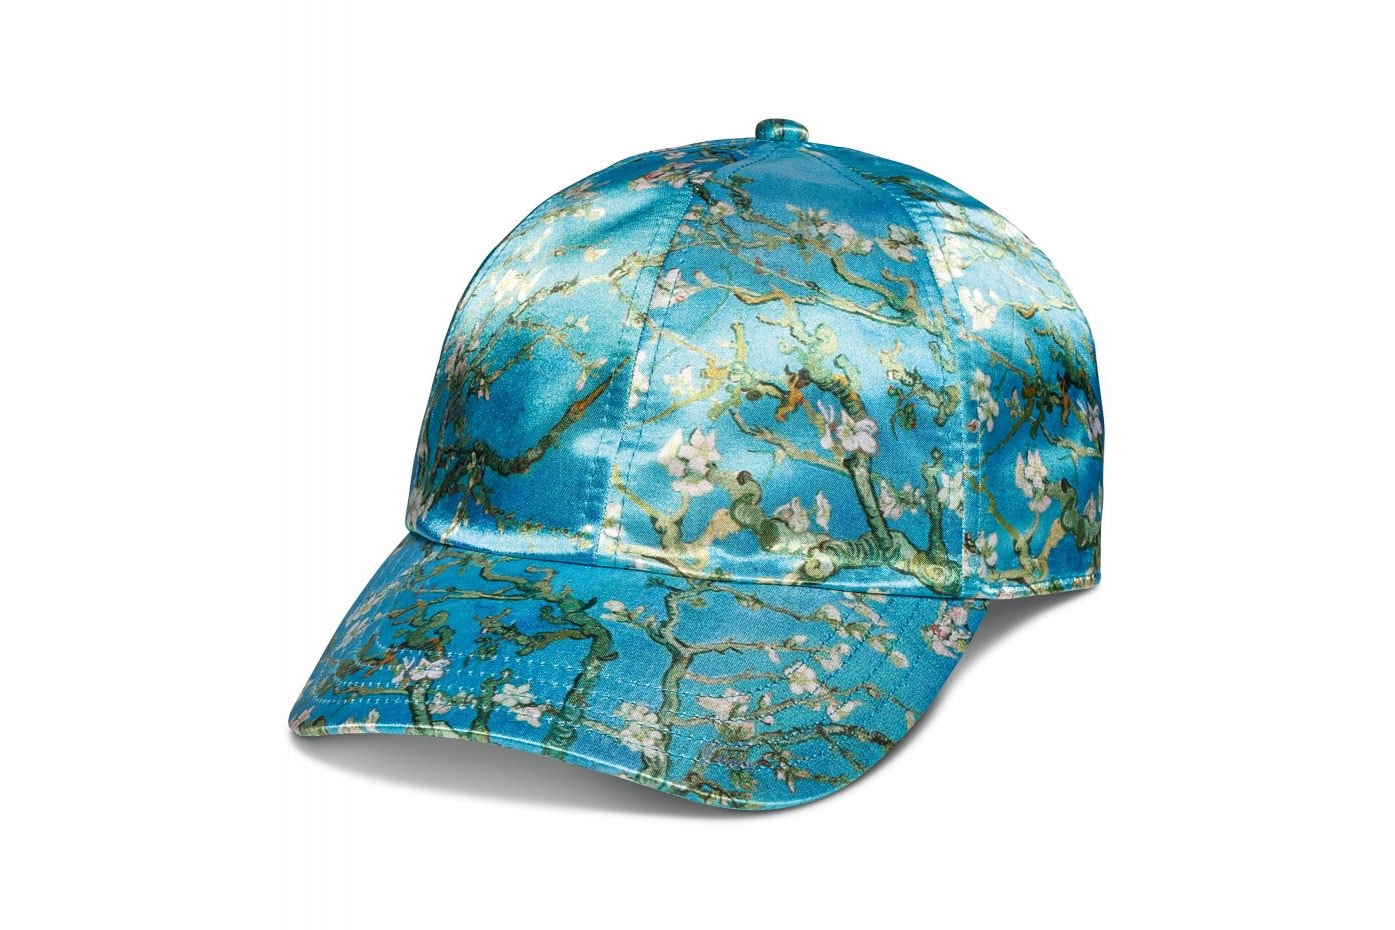 vincent van gogh museum vans collaboration artwork satin cap hat almond flower blue blossom